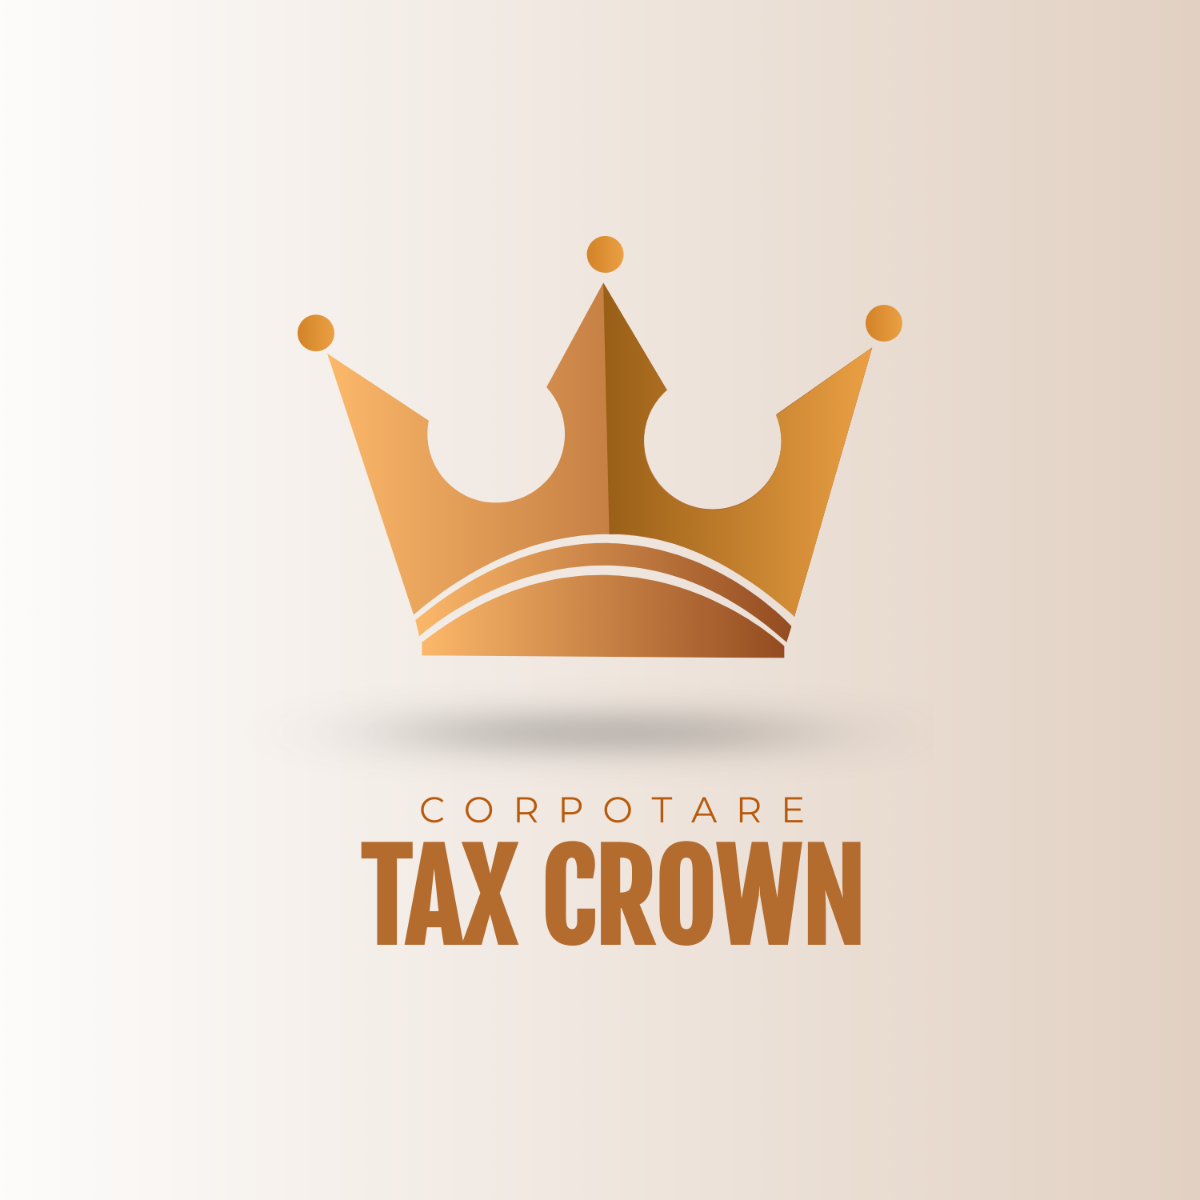 Corporate Tax Crown Logo Template